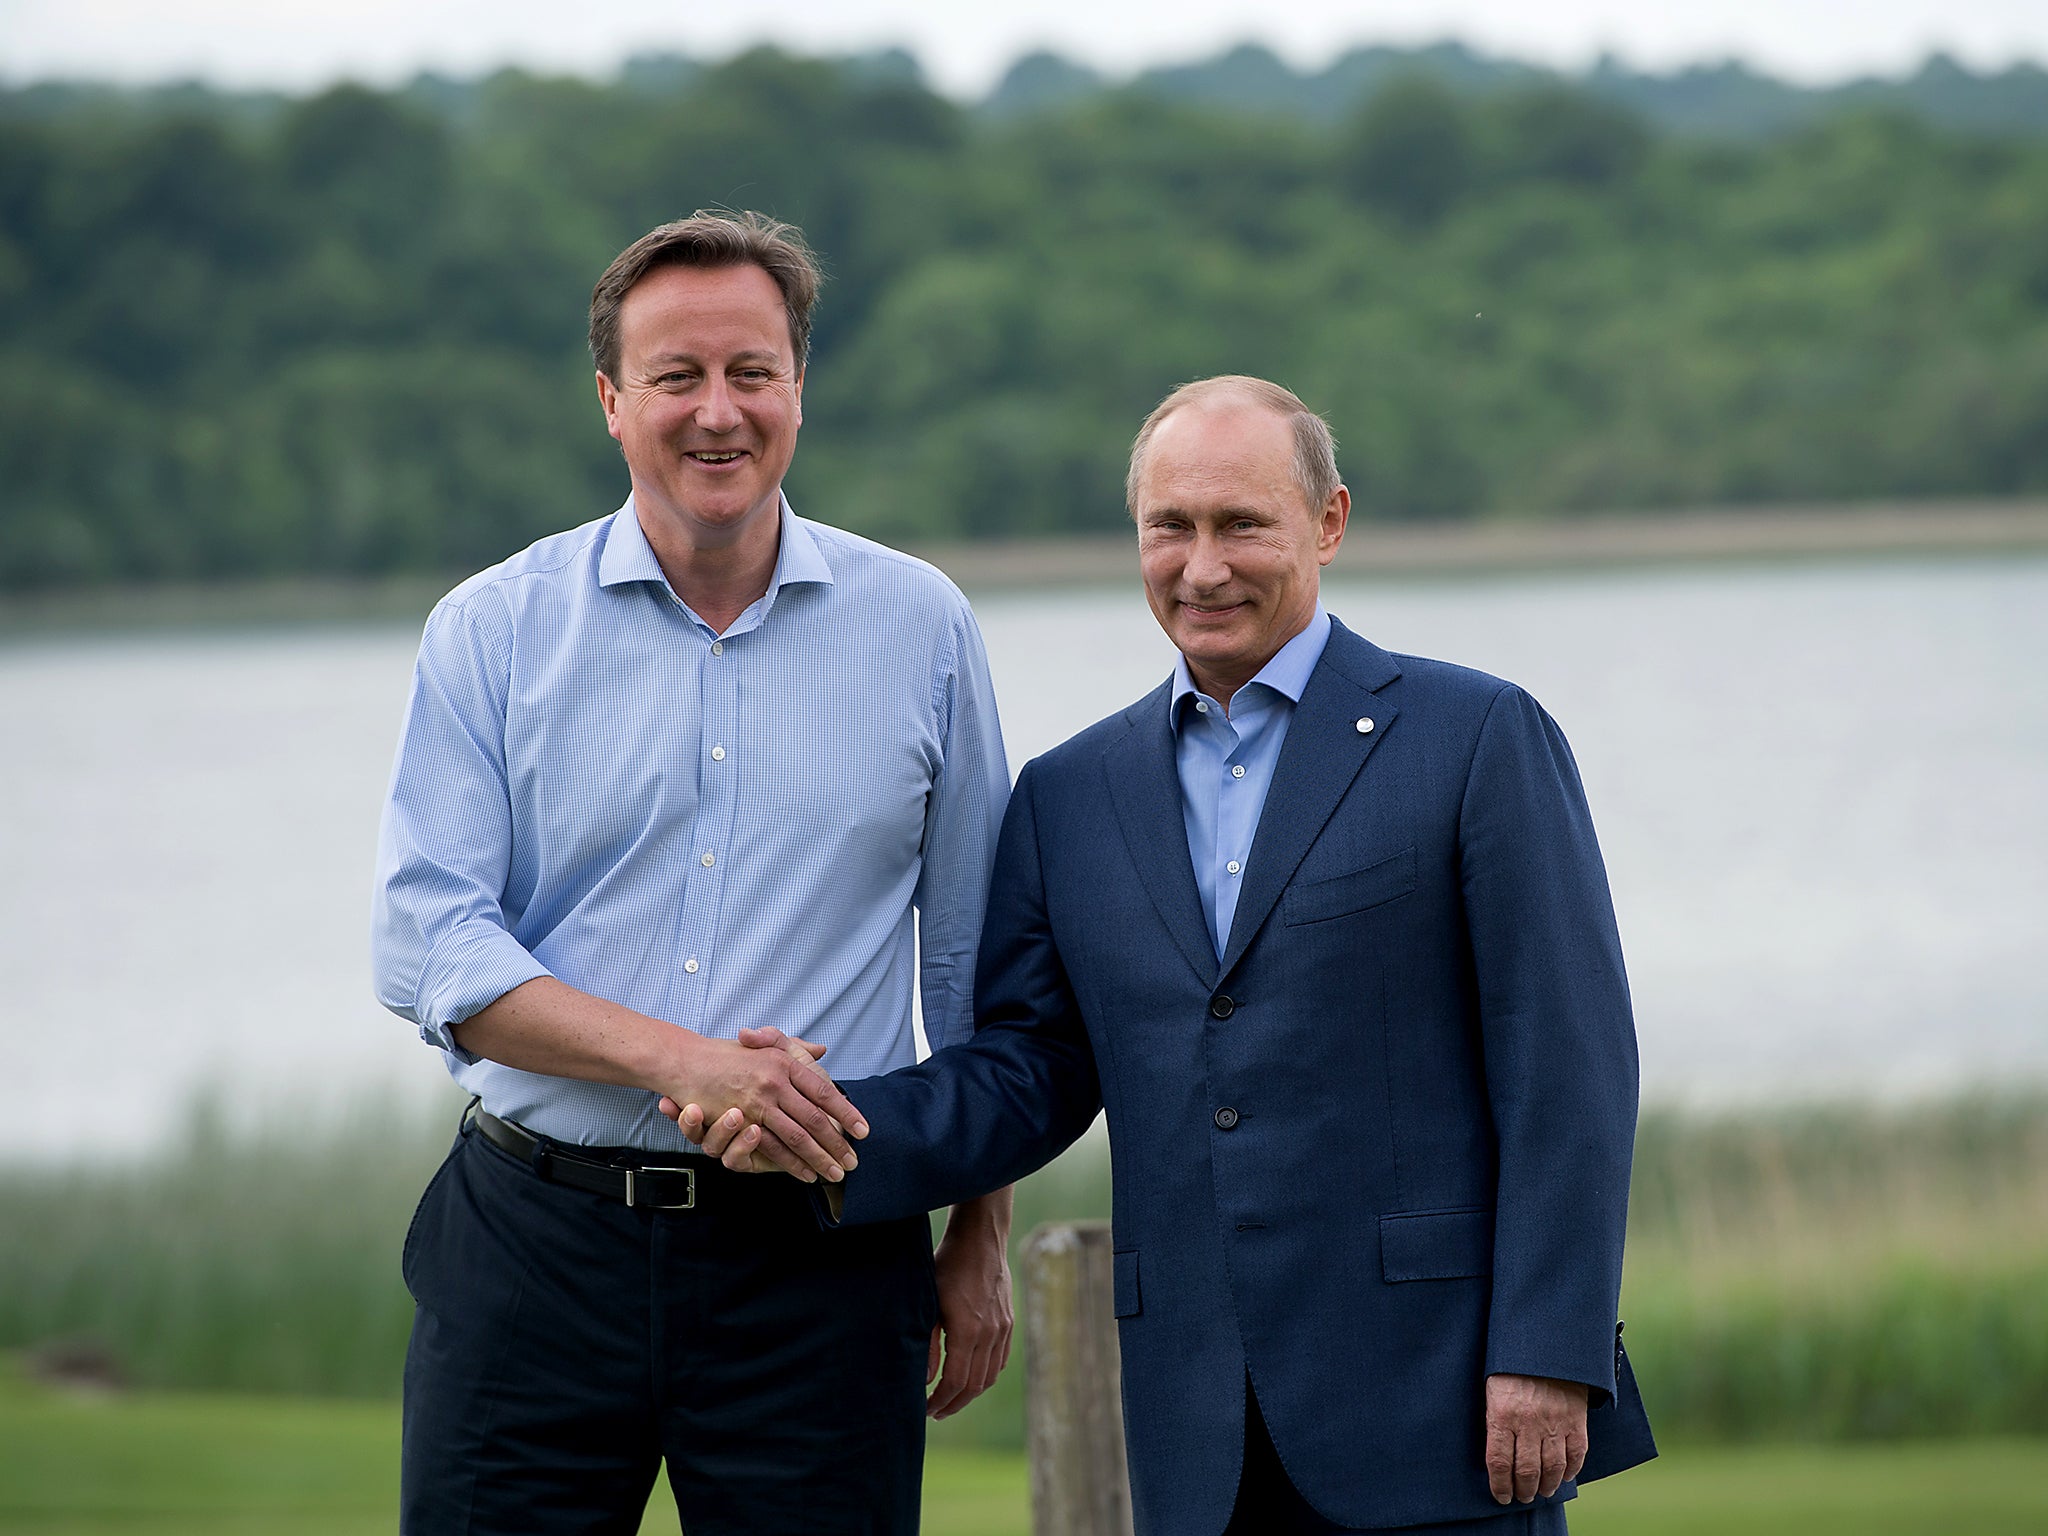 David Cameron and Vladimir Putin at the G8 Summit in Northern Ireland in June 2013